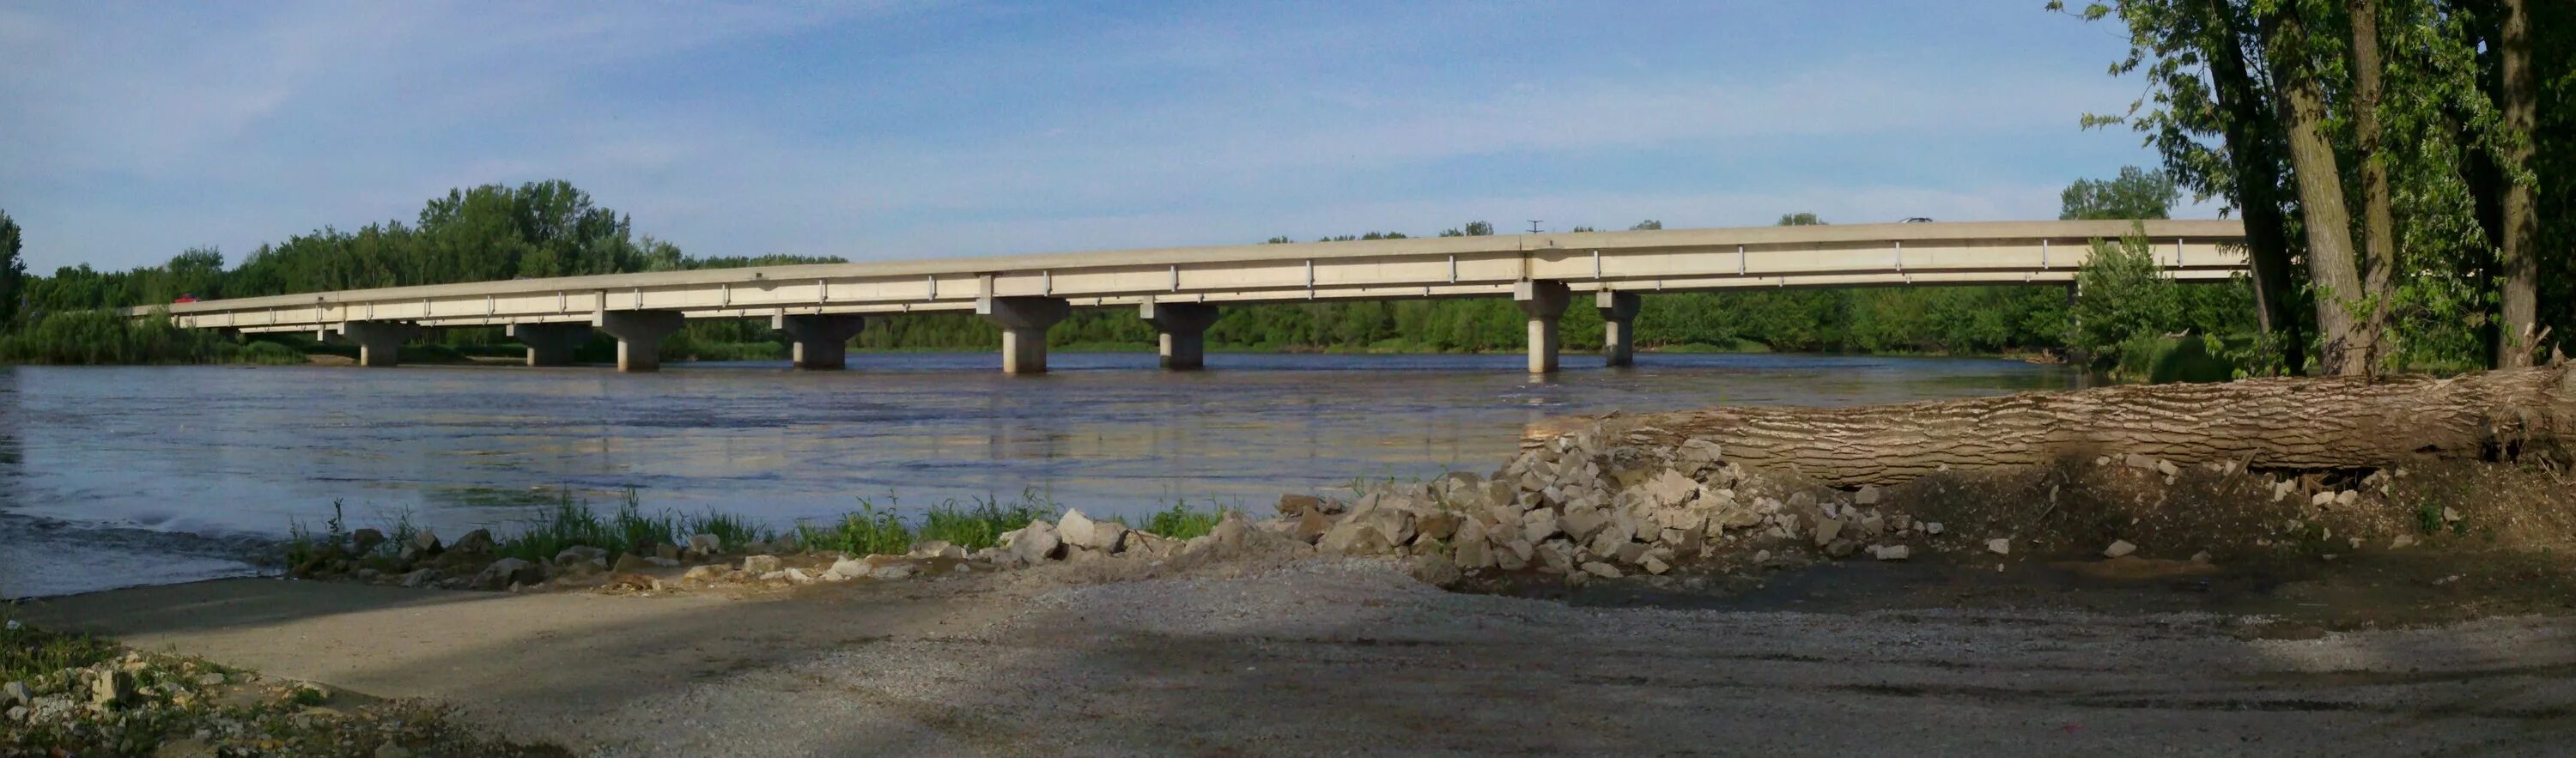 Железная дорога пересекает реку. Река де Мойн. Pleasant Hill, Missouri.